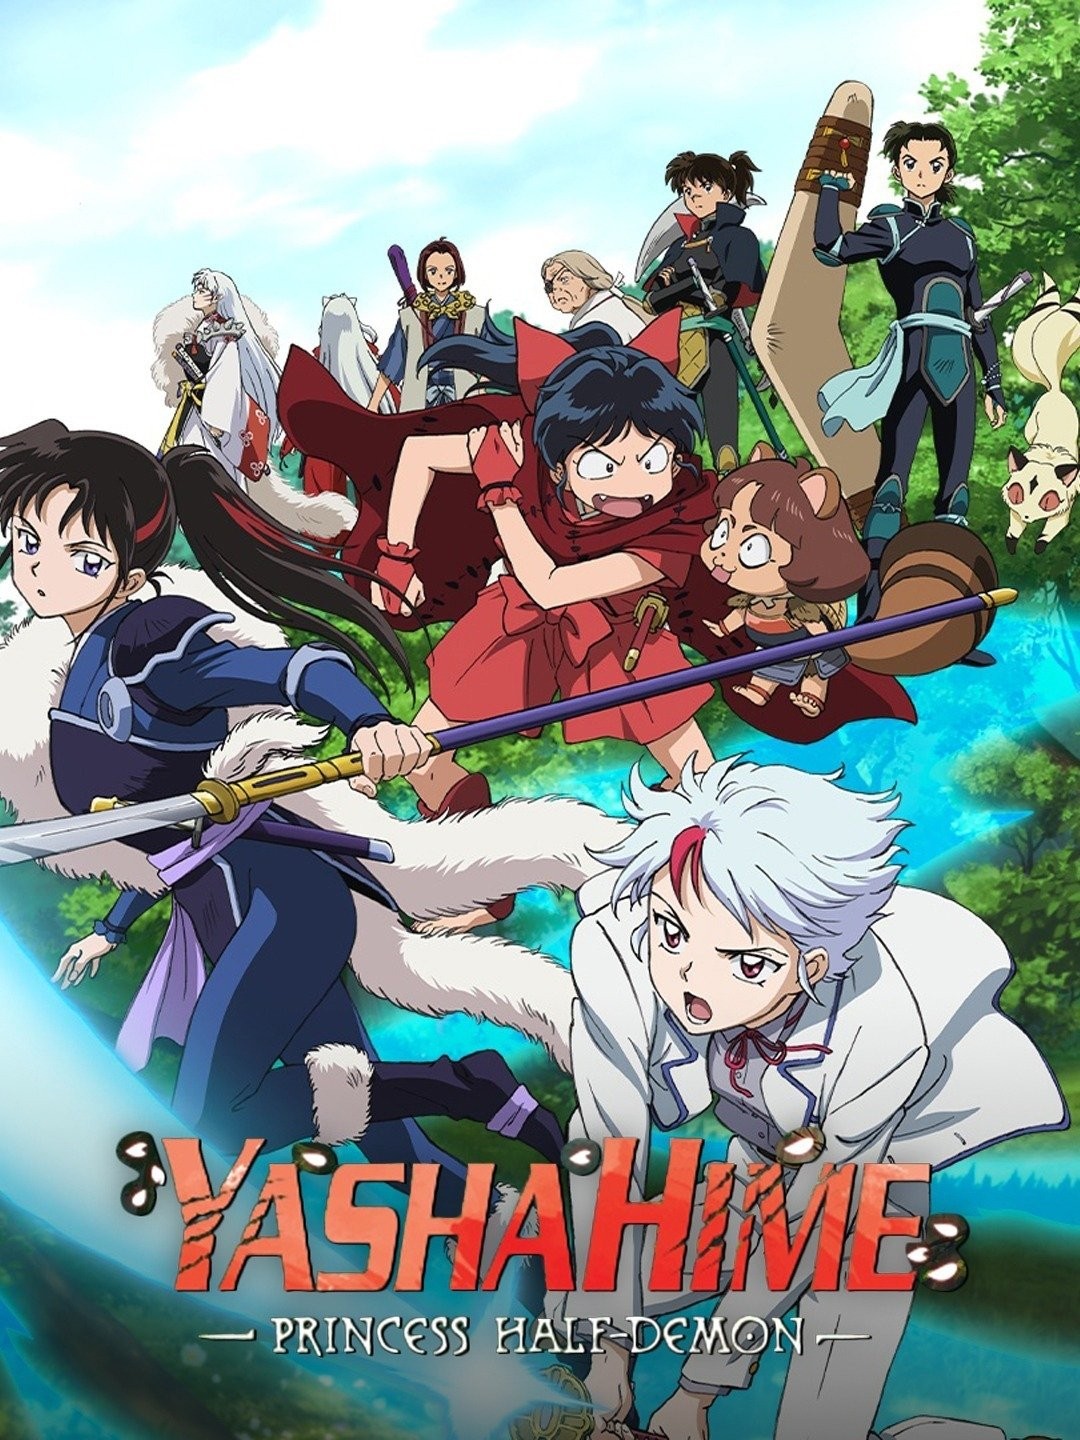 Yashahime: Princess Half-Demon Opening 1 